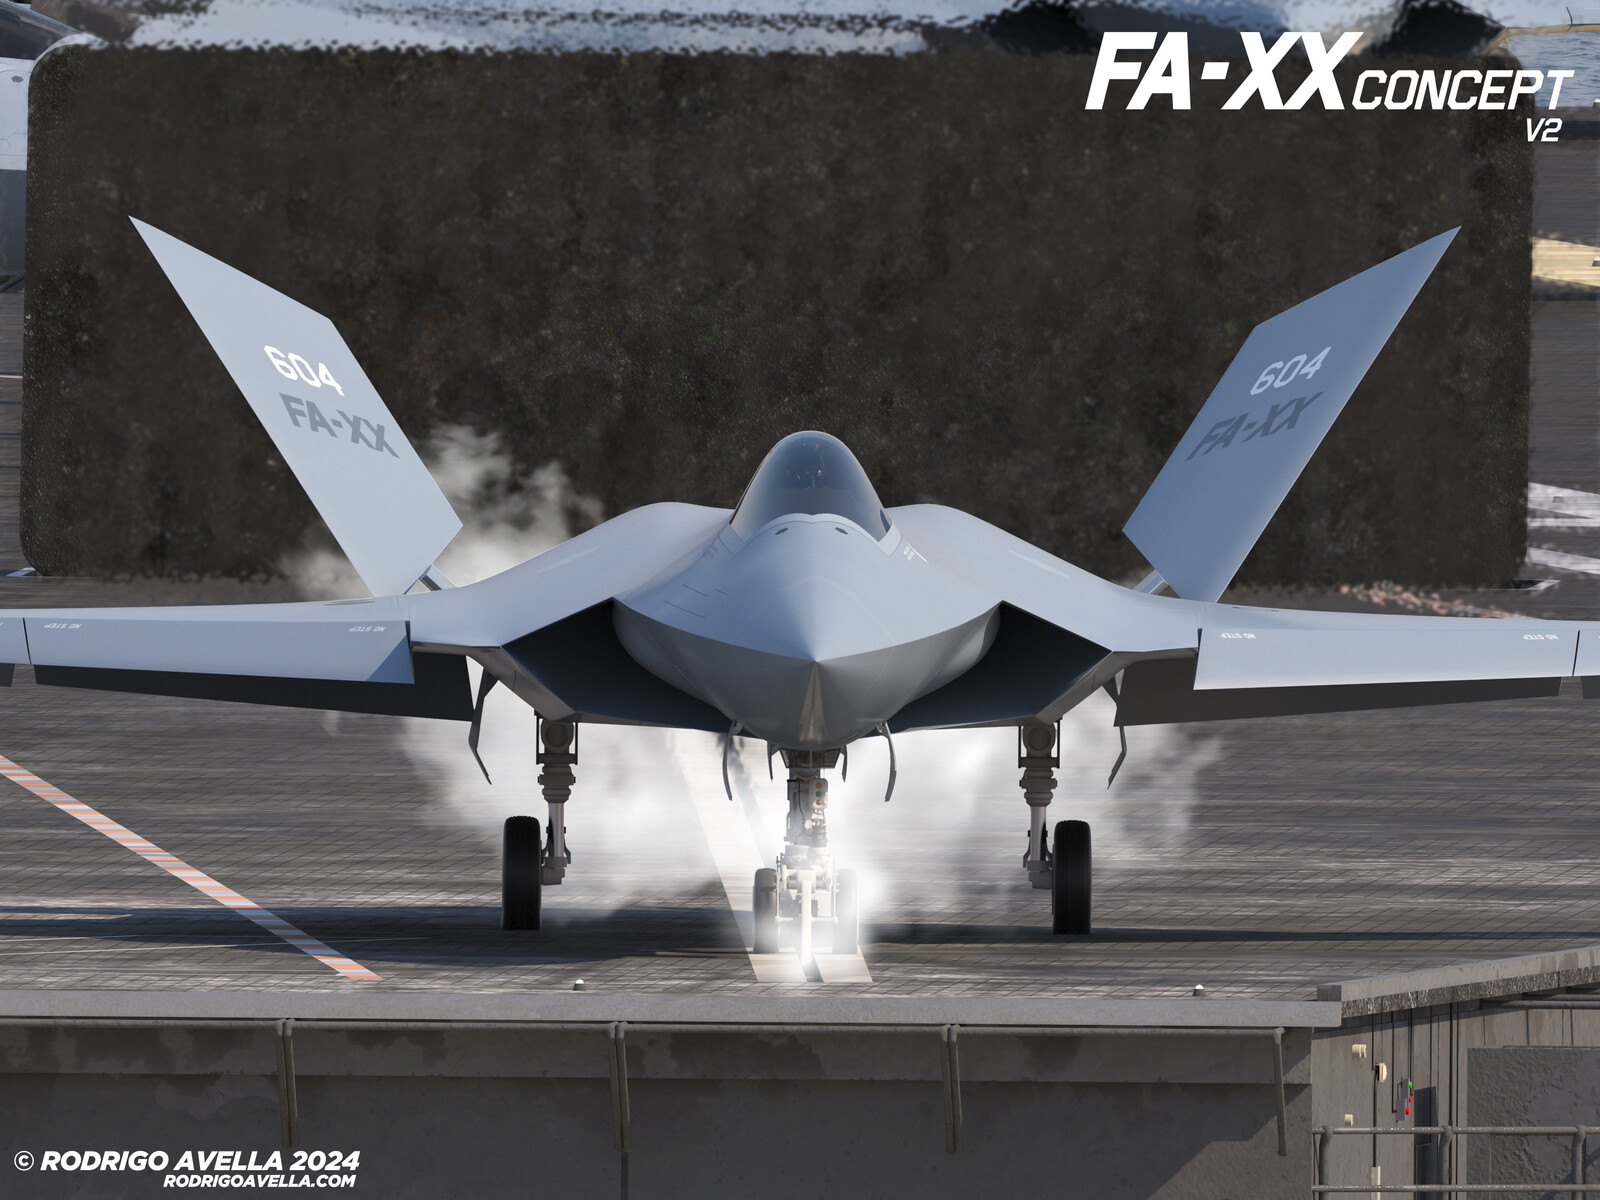 FA-XX V2 - Sixth generation fighter concept